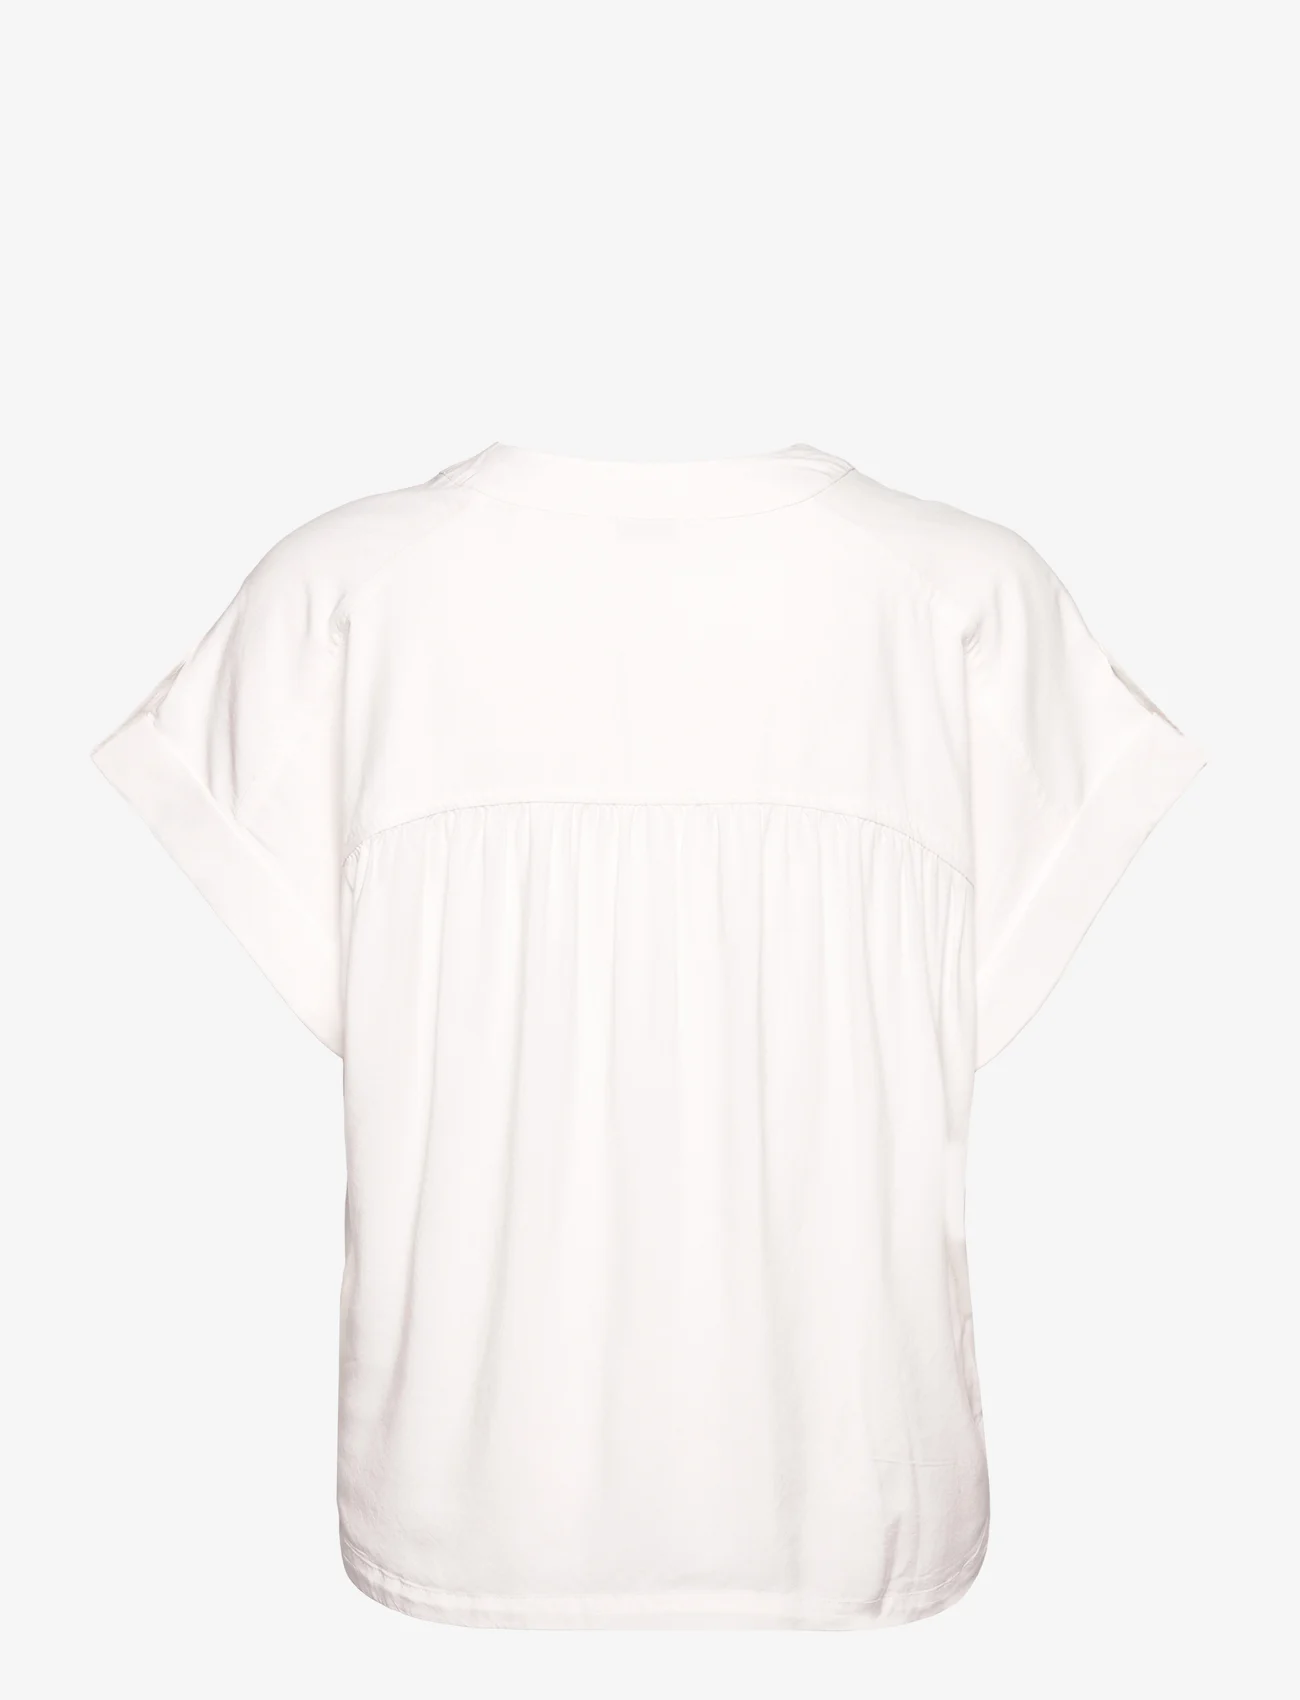 Esprit Casual - Blouses woven - kortärmade blusar - off white - 1